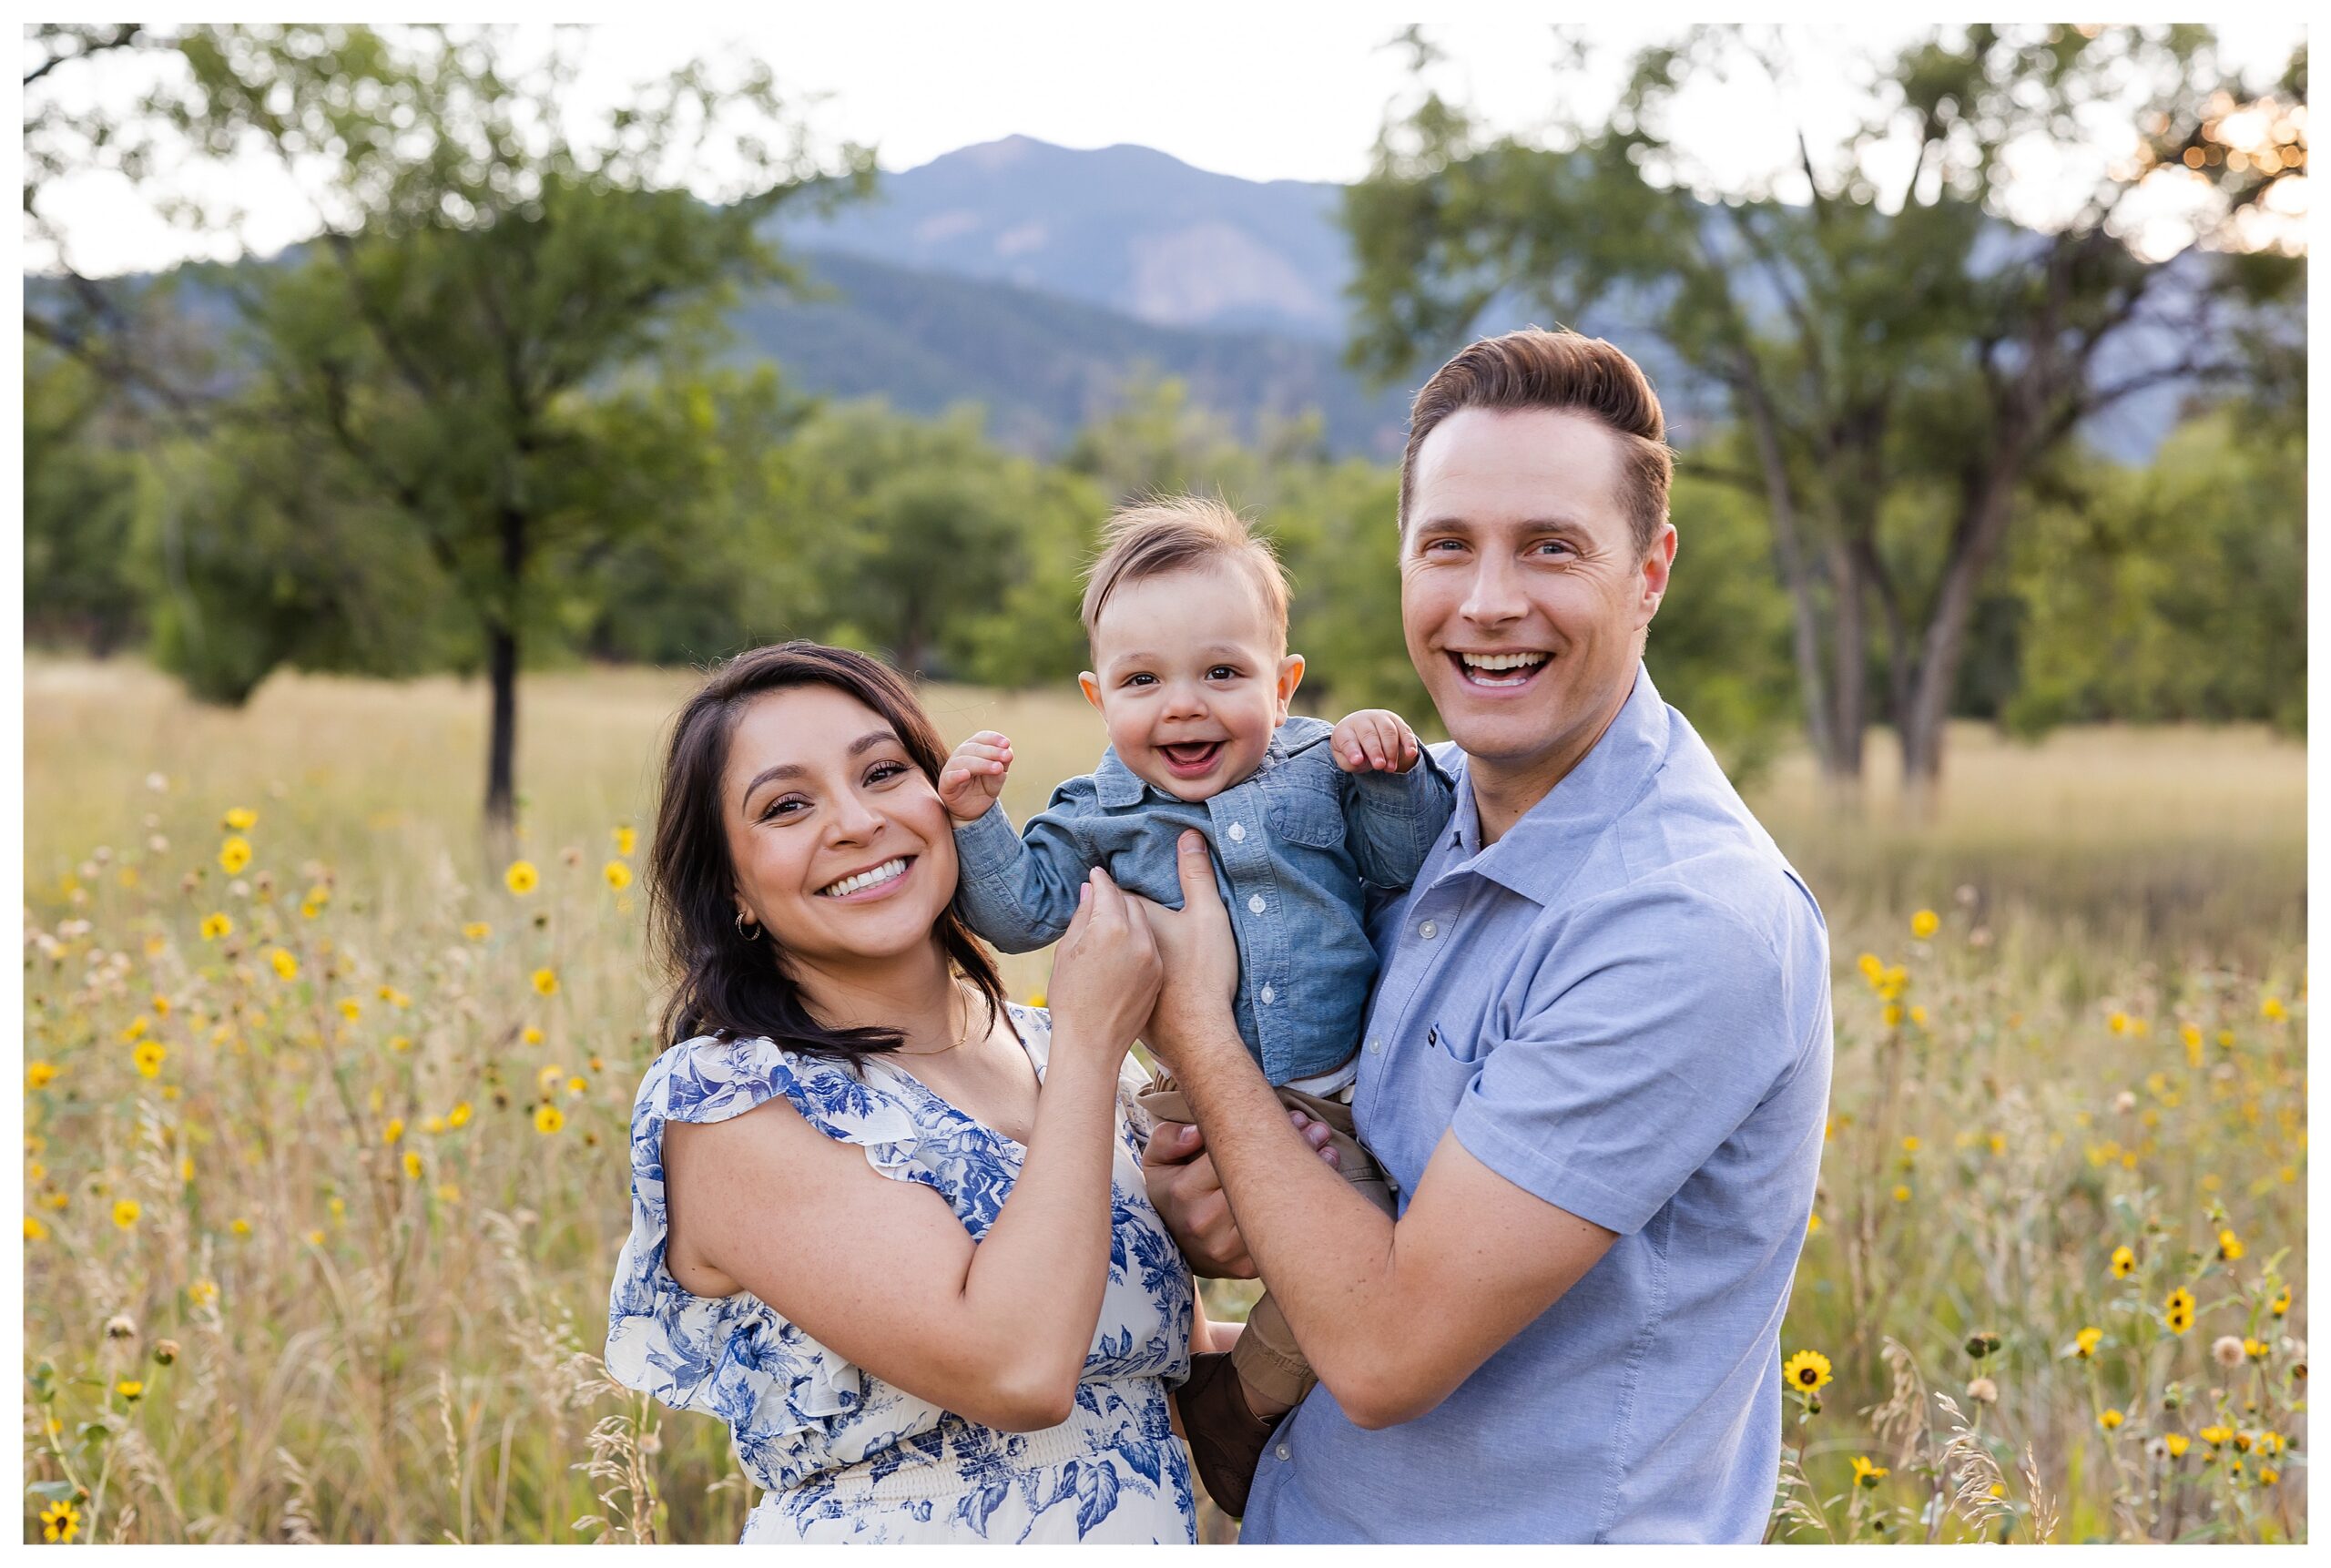 Colorado Springs family photography at Bear Creek Park